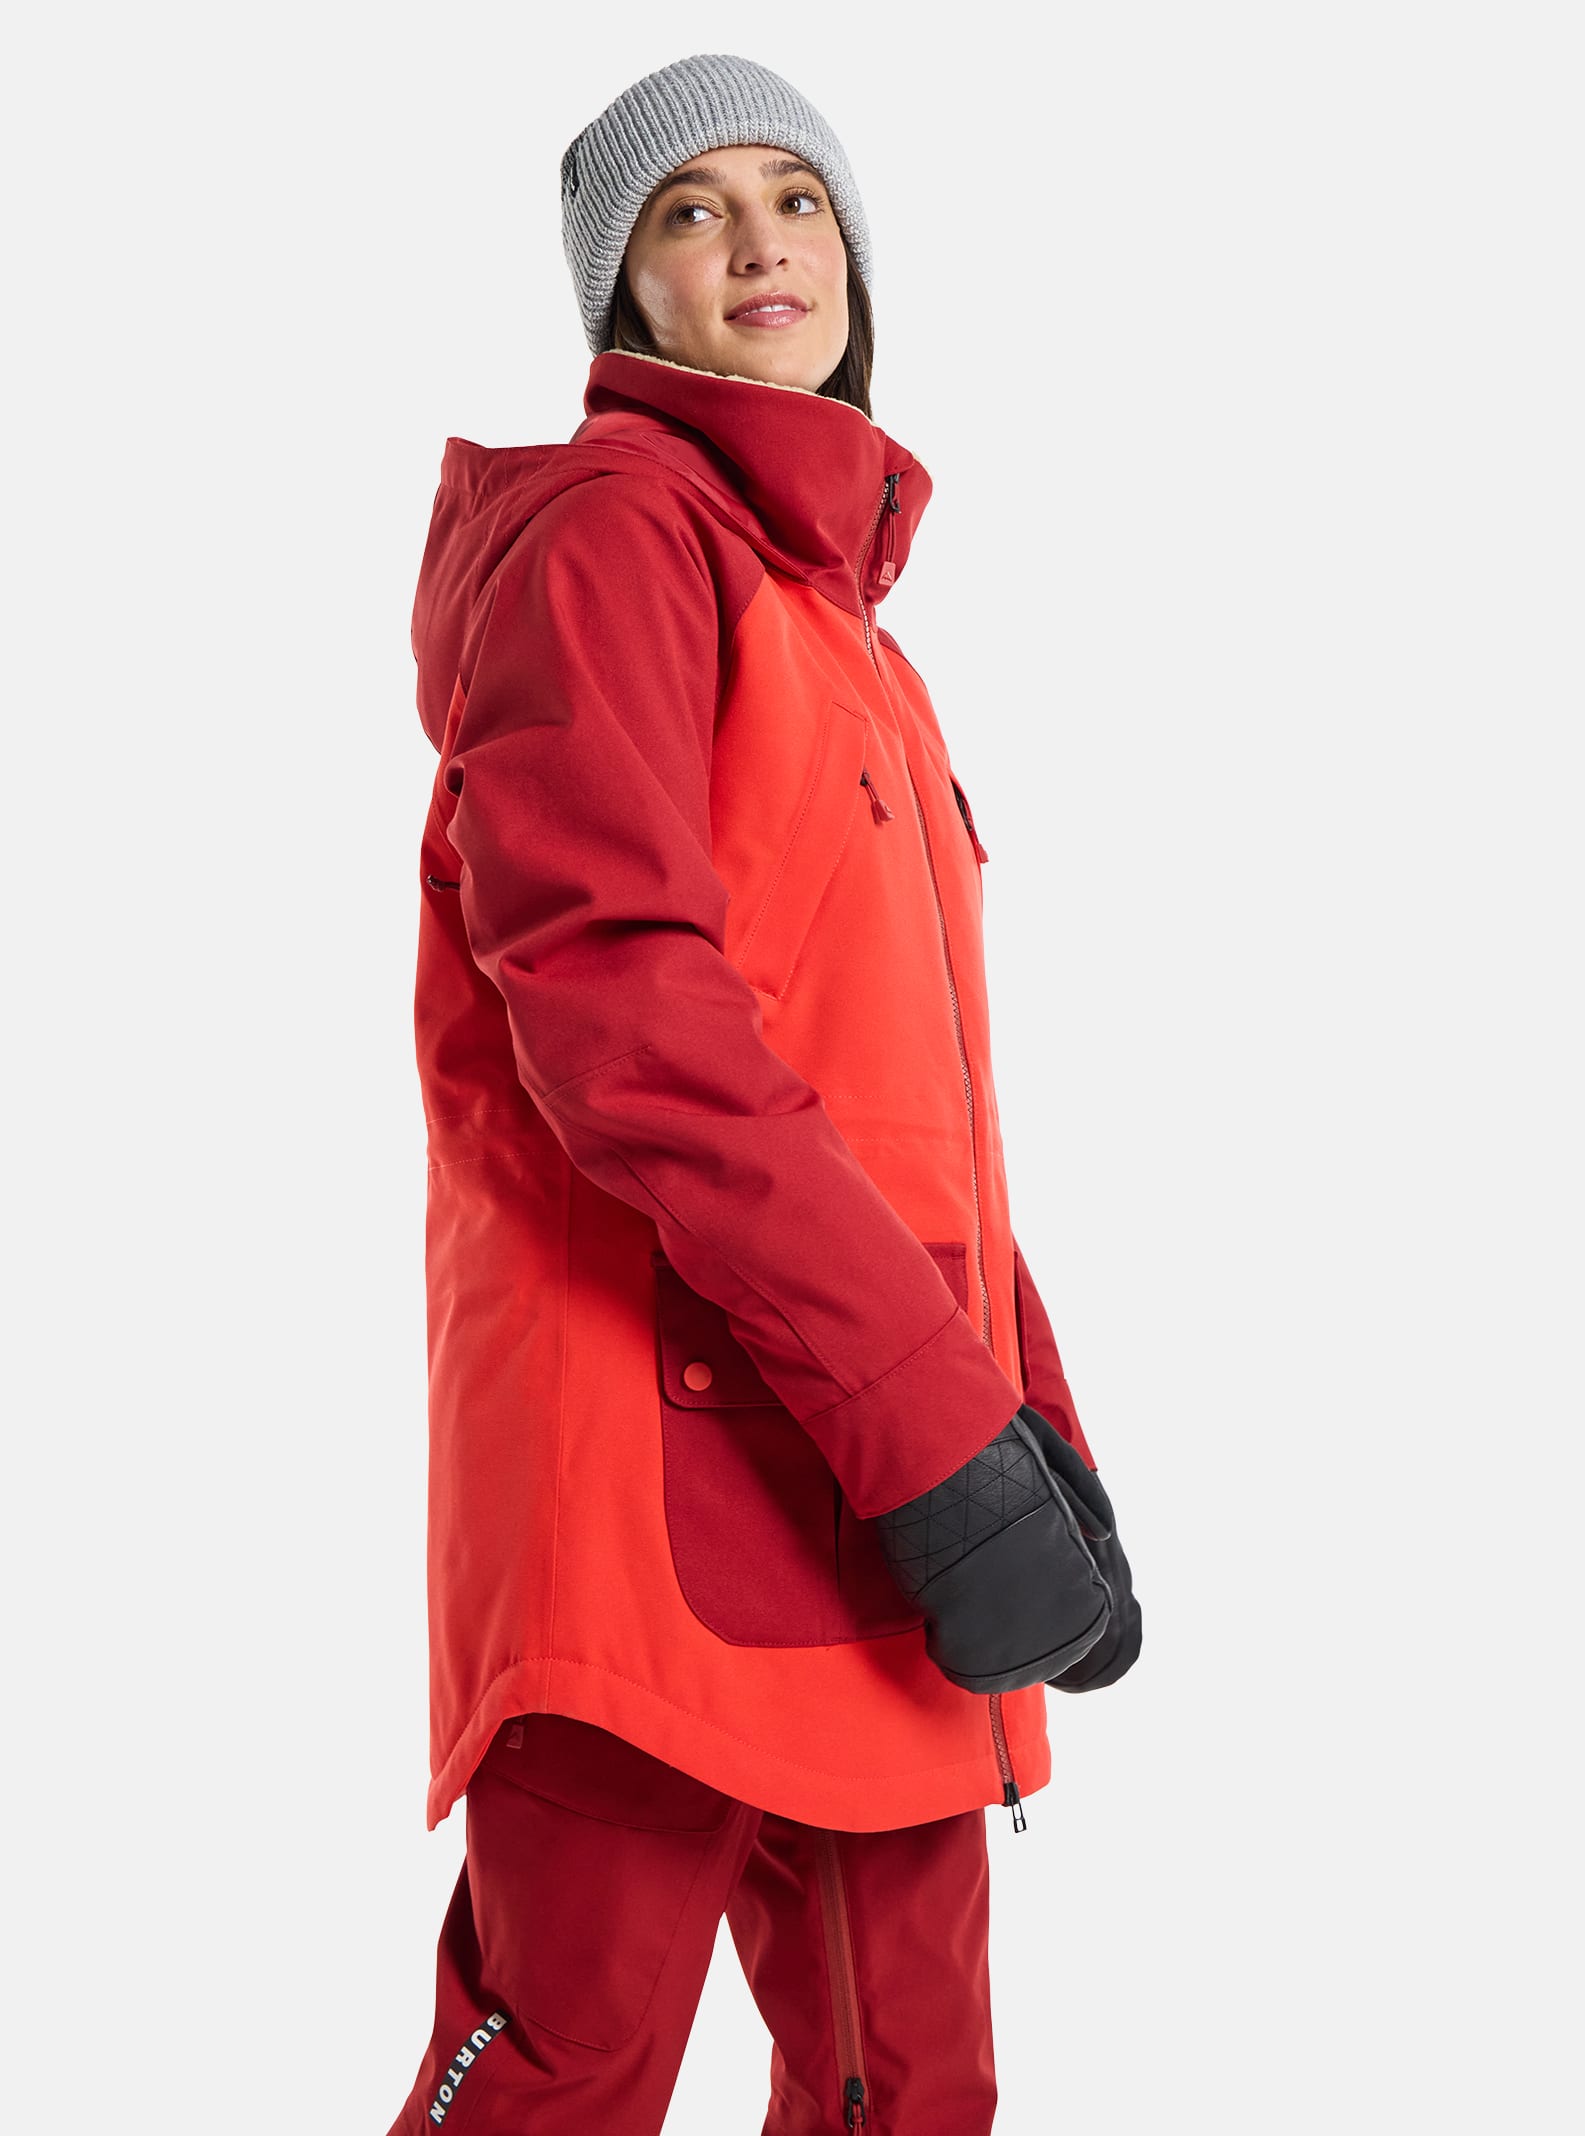 Women's Small Details about   Burton Ski/Snowboard Jacket 